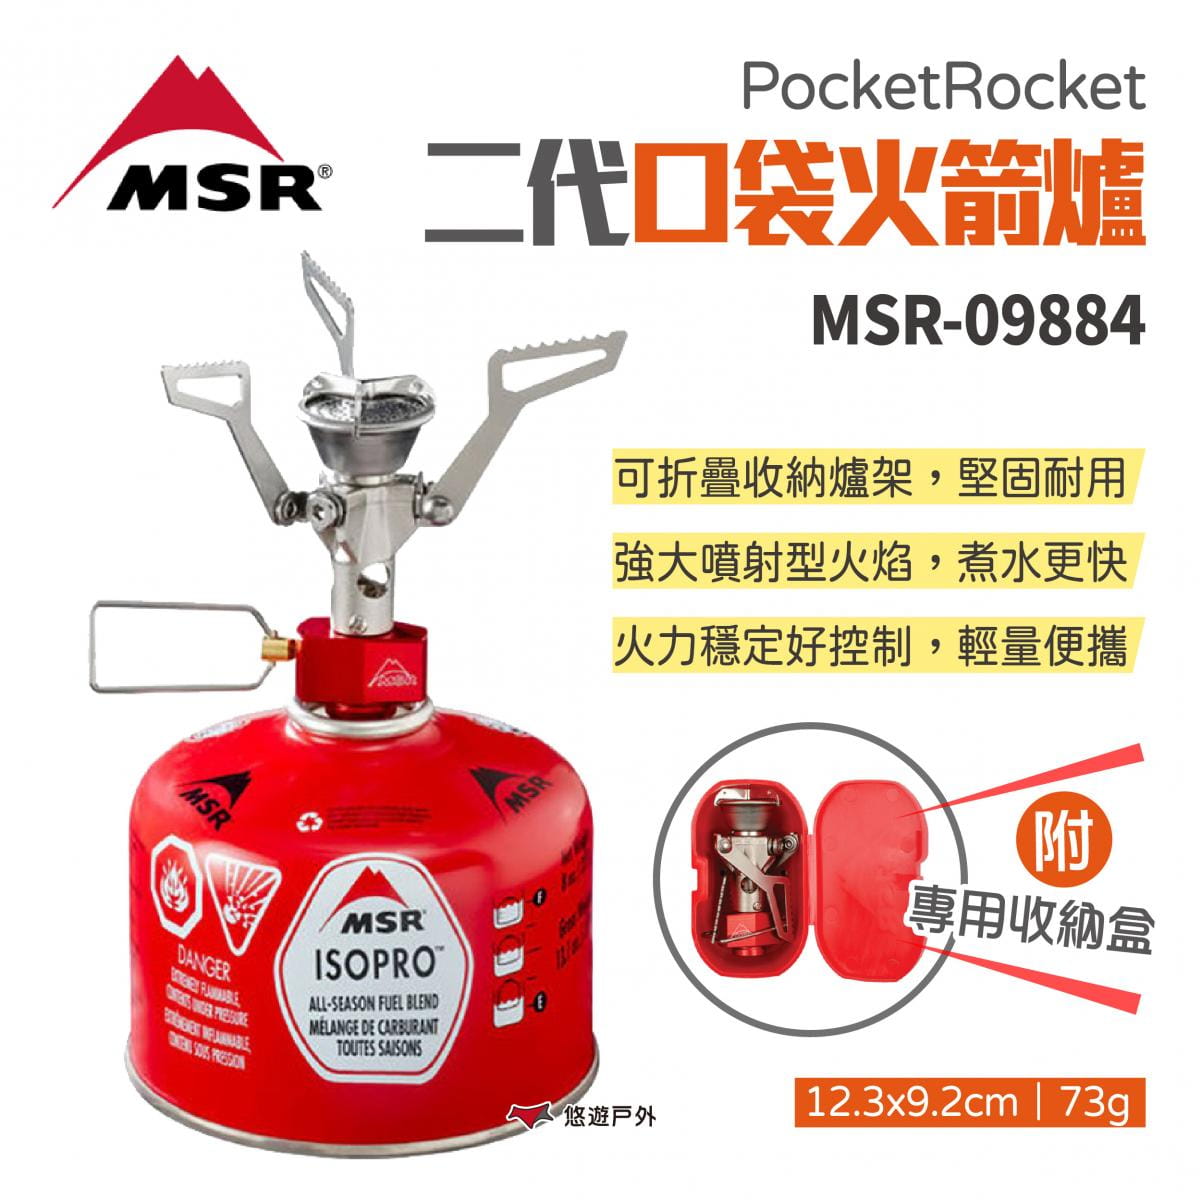 【MSR】PocketRocket 2代口袋火箭爐 MSR-09884  (悠遊戶外) 0